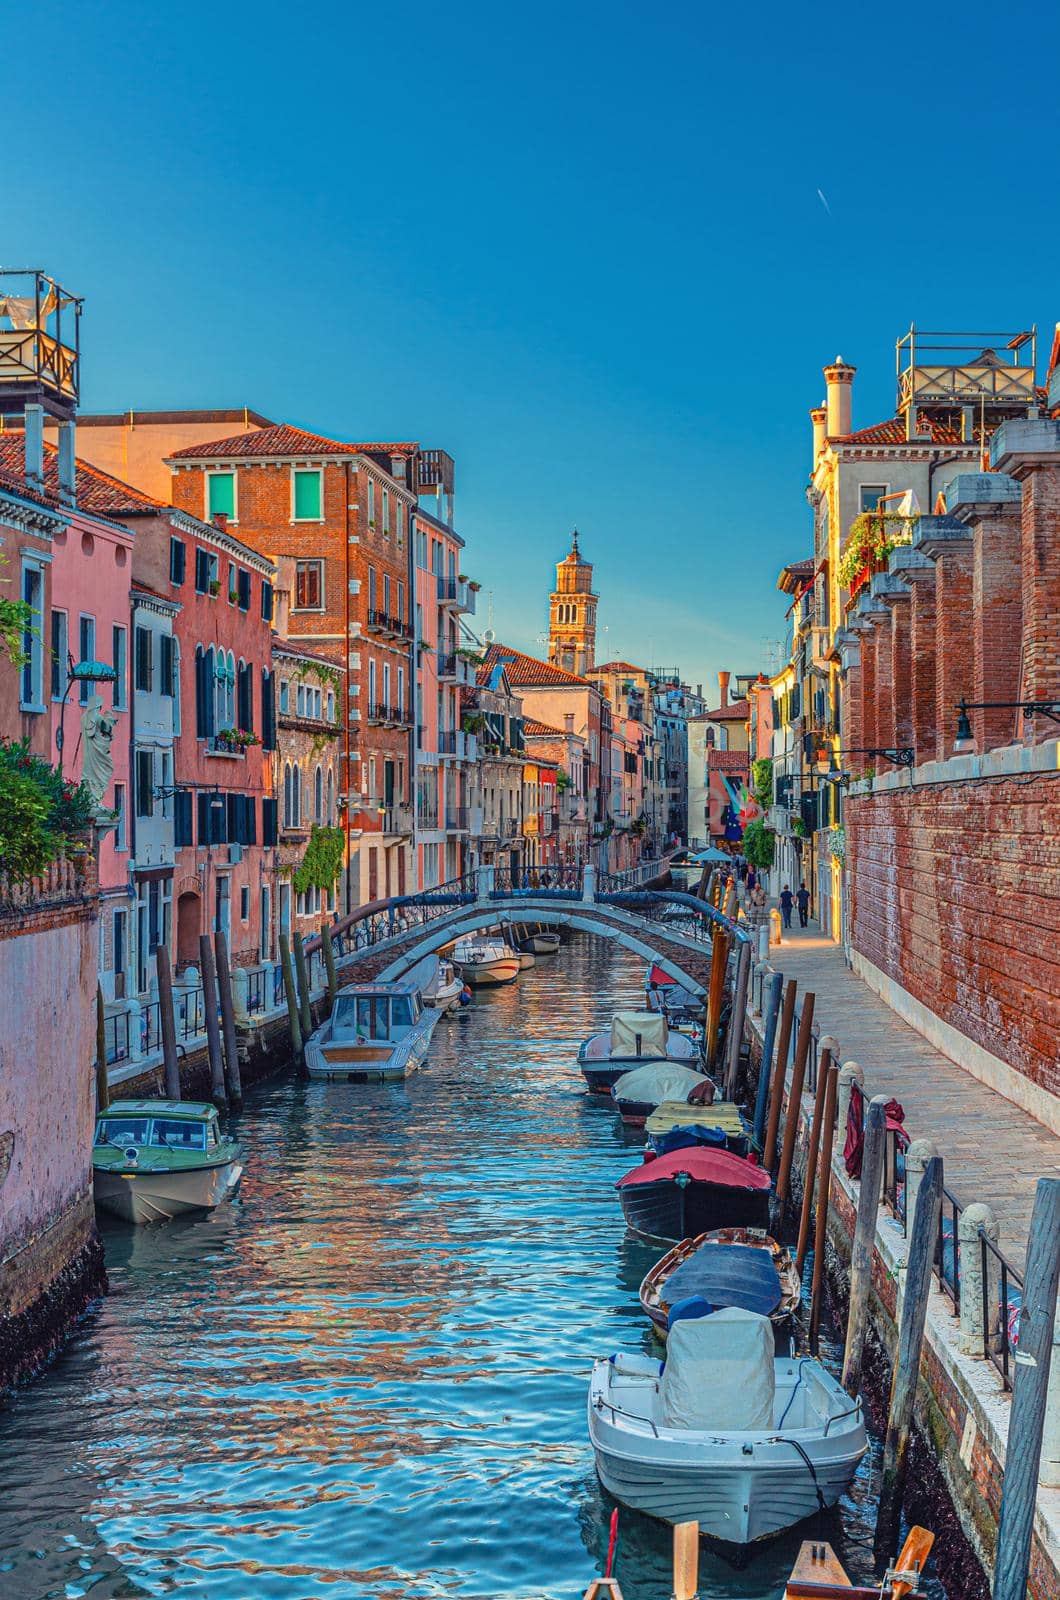 Venice cityscape with narrow water canal by Aliaksandr_Antanovich